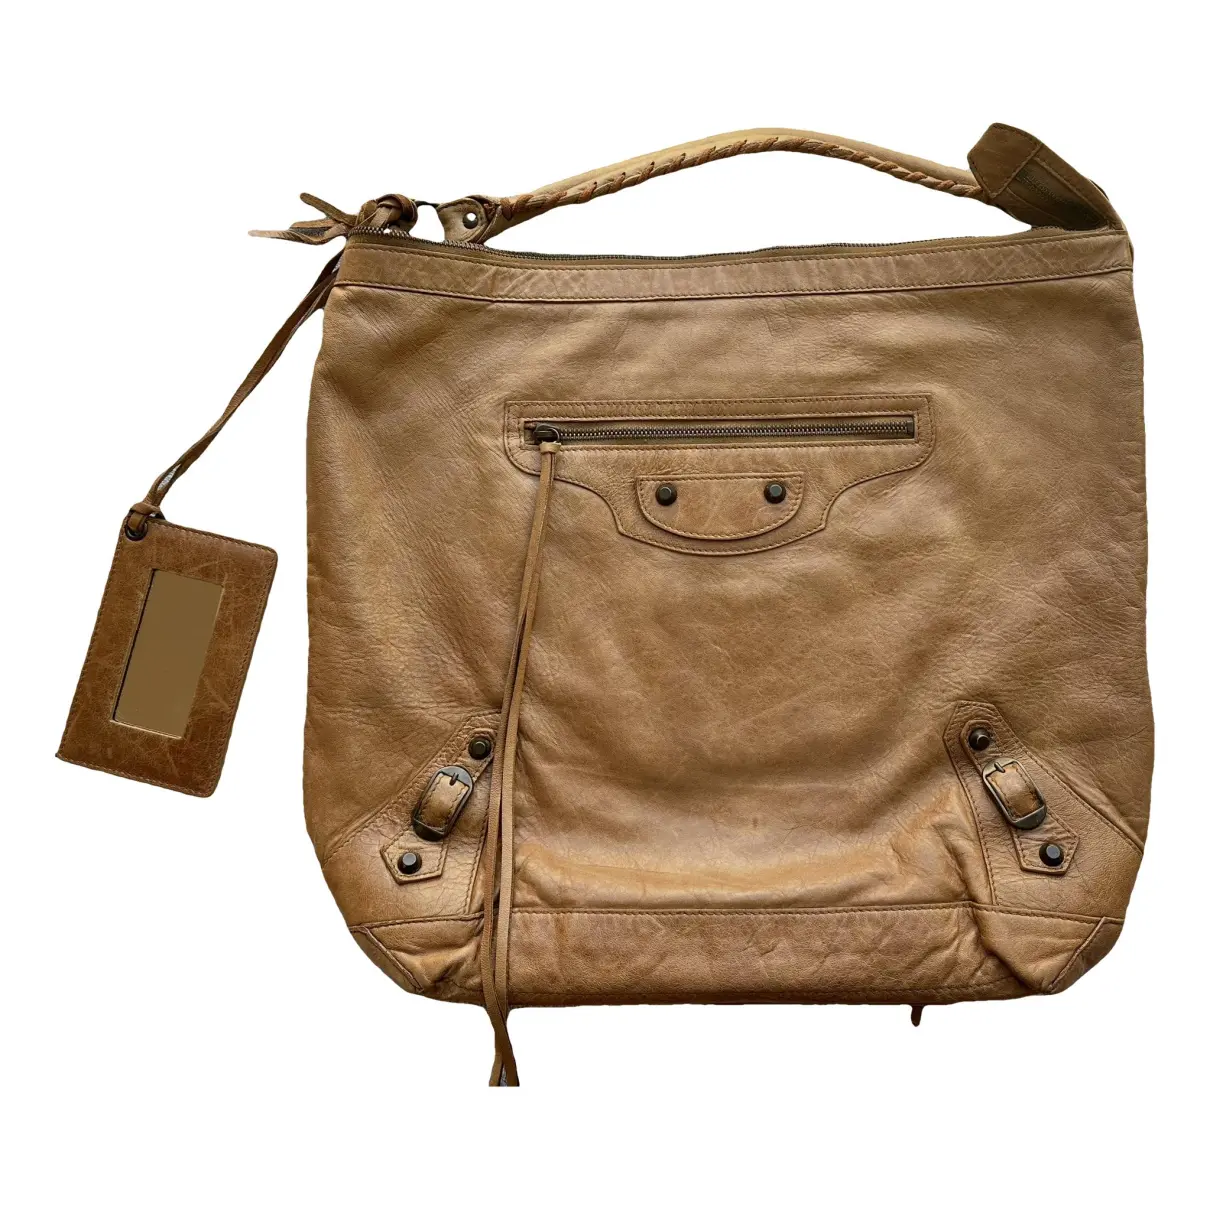 Day leather handbag